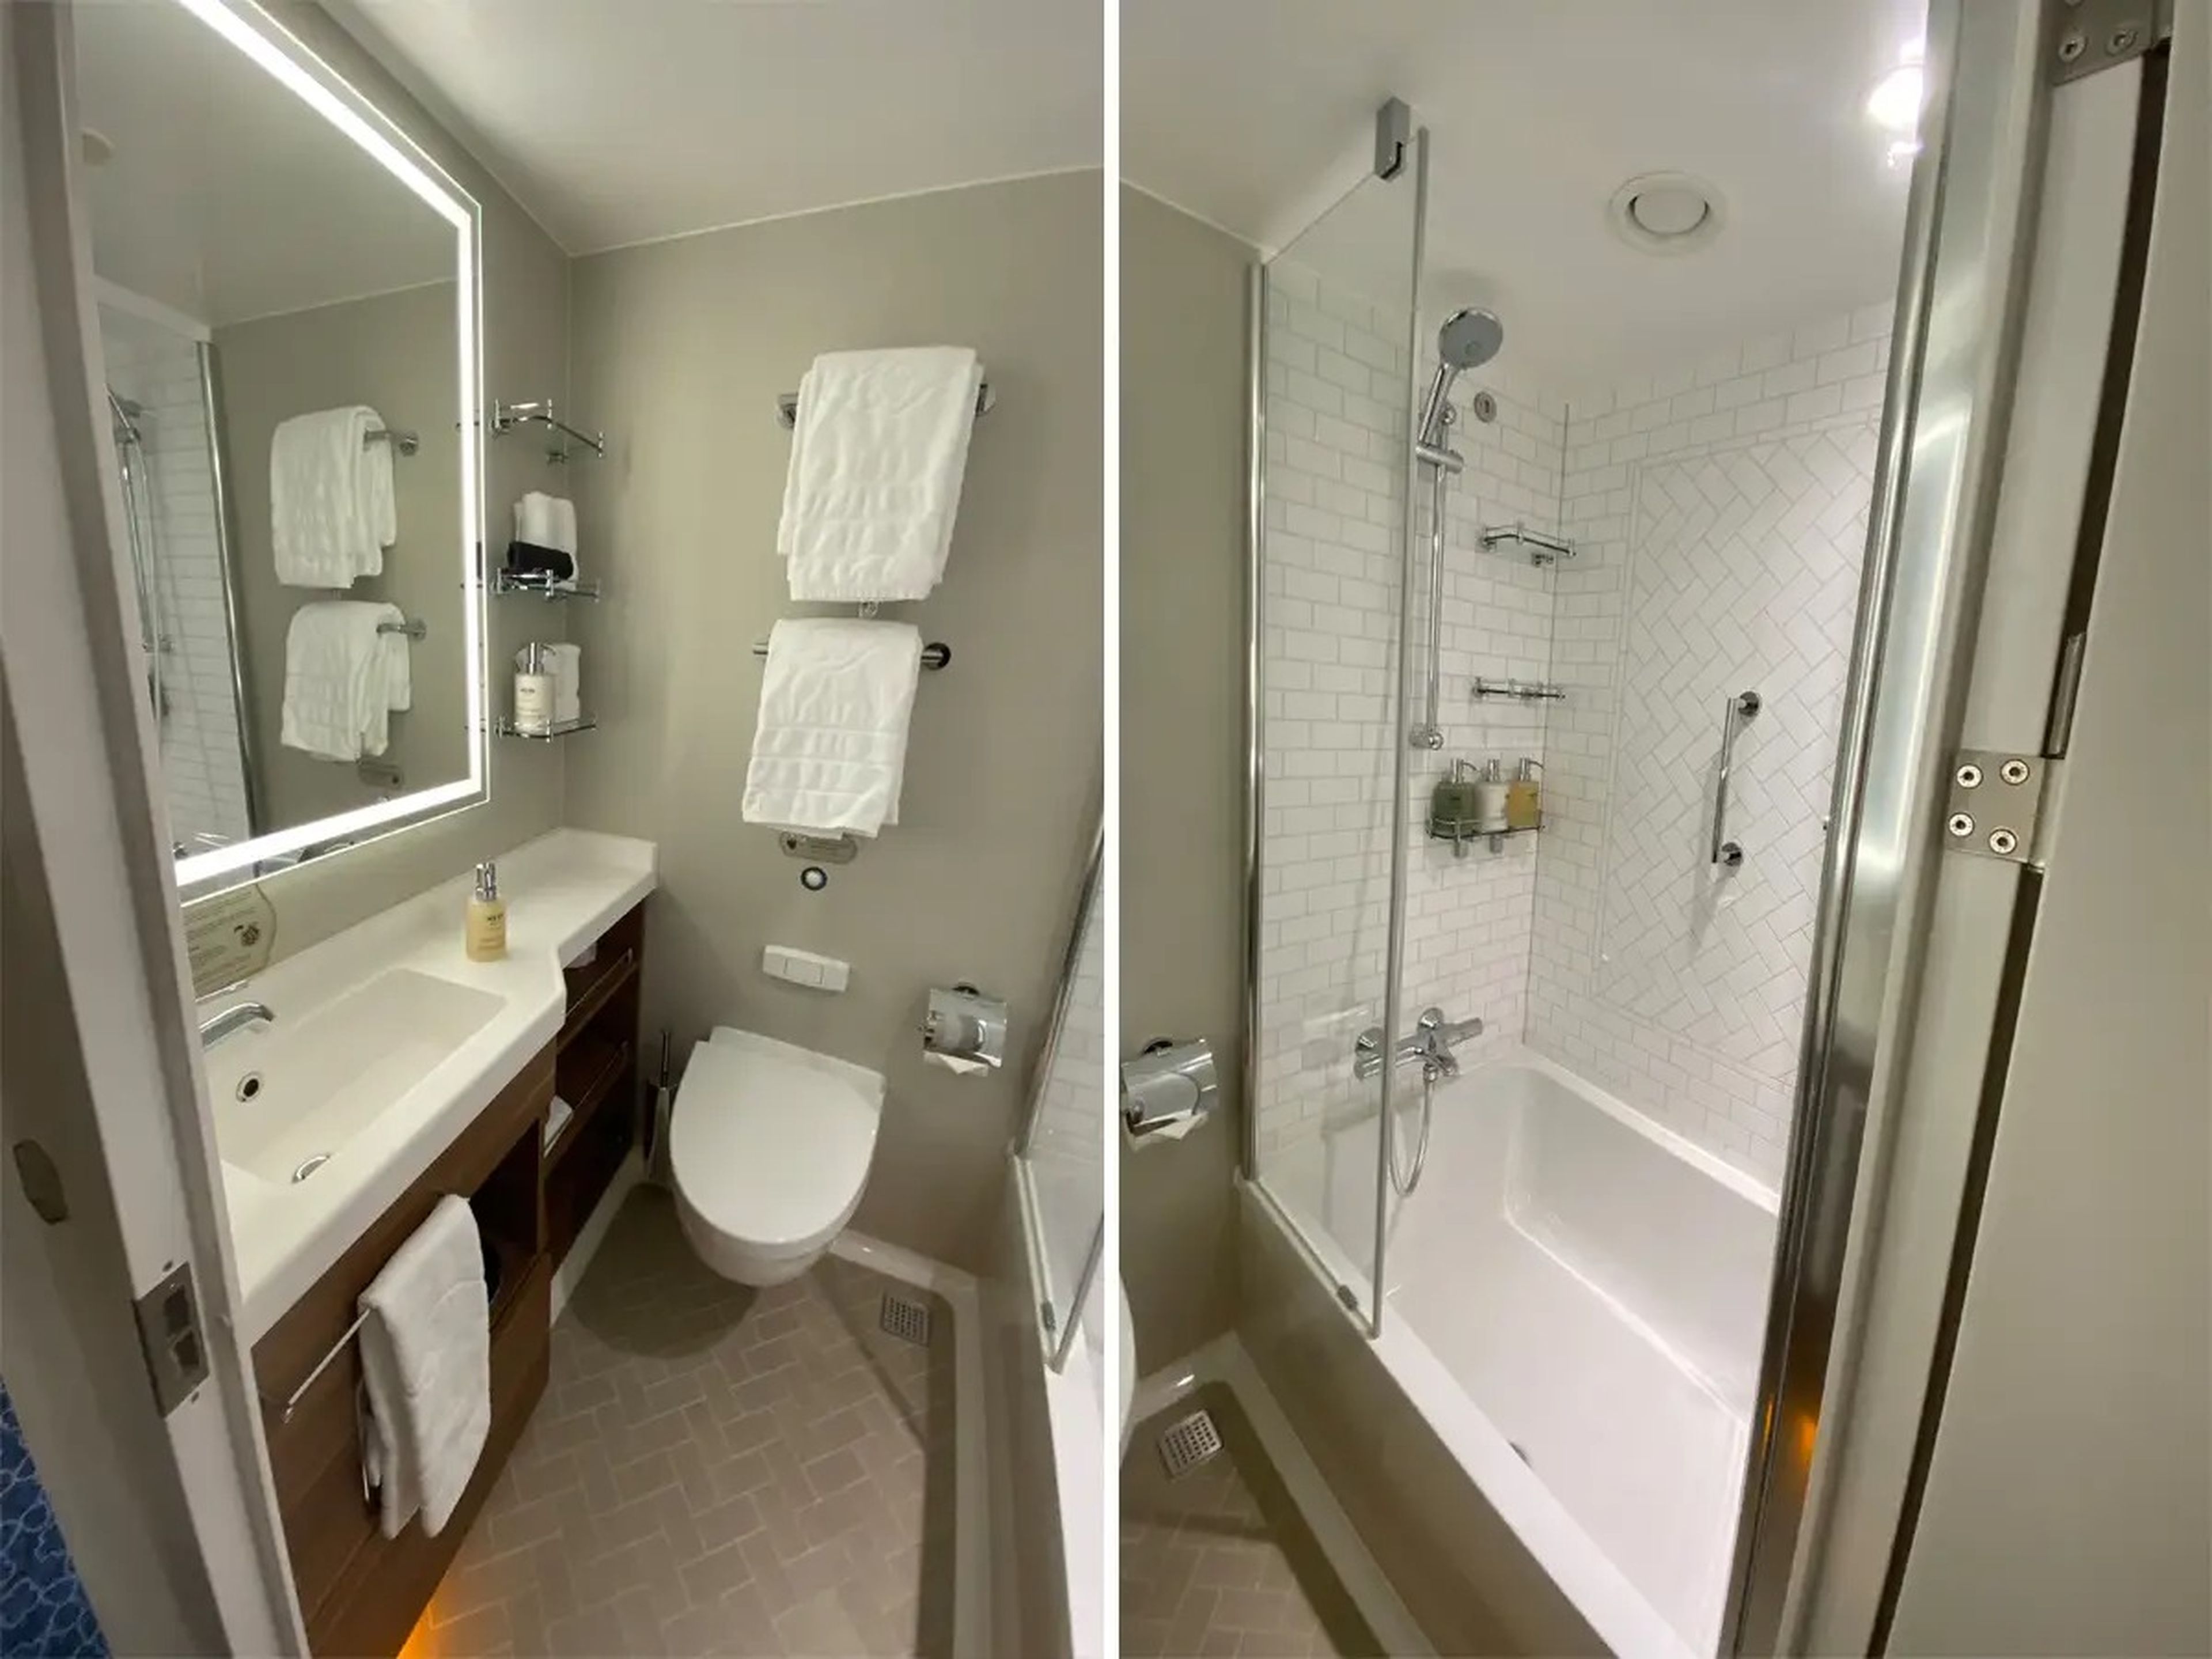 A bathroom inside a standard stateroom aboard the Disney Wish cruise.